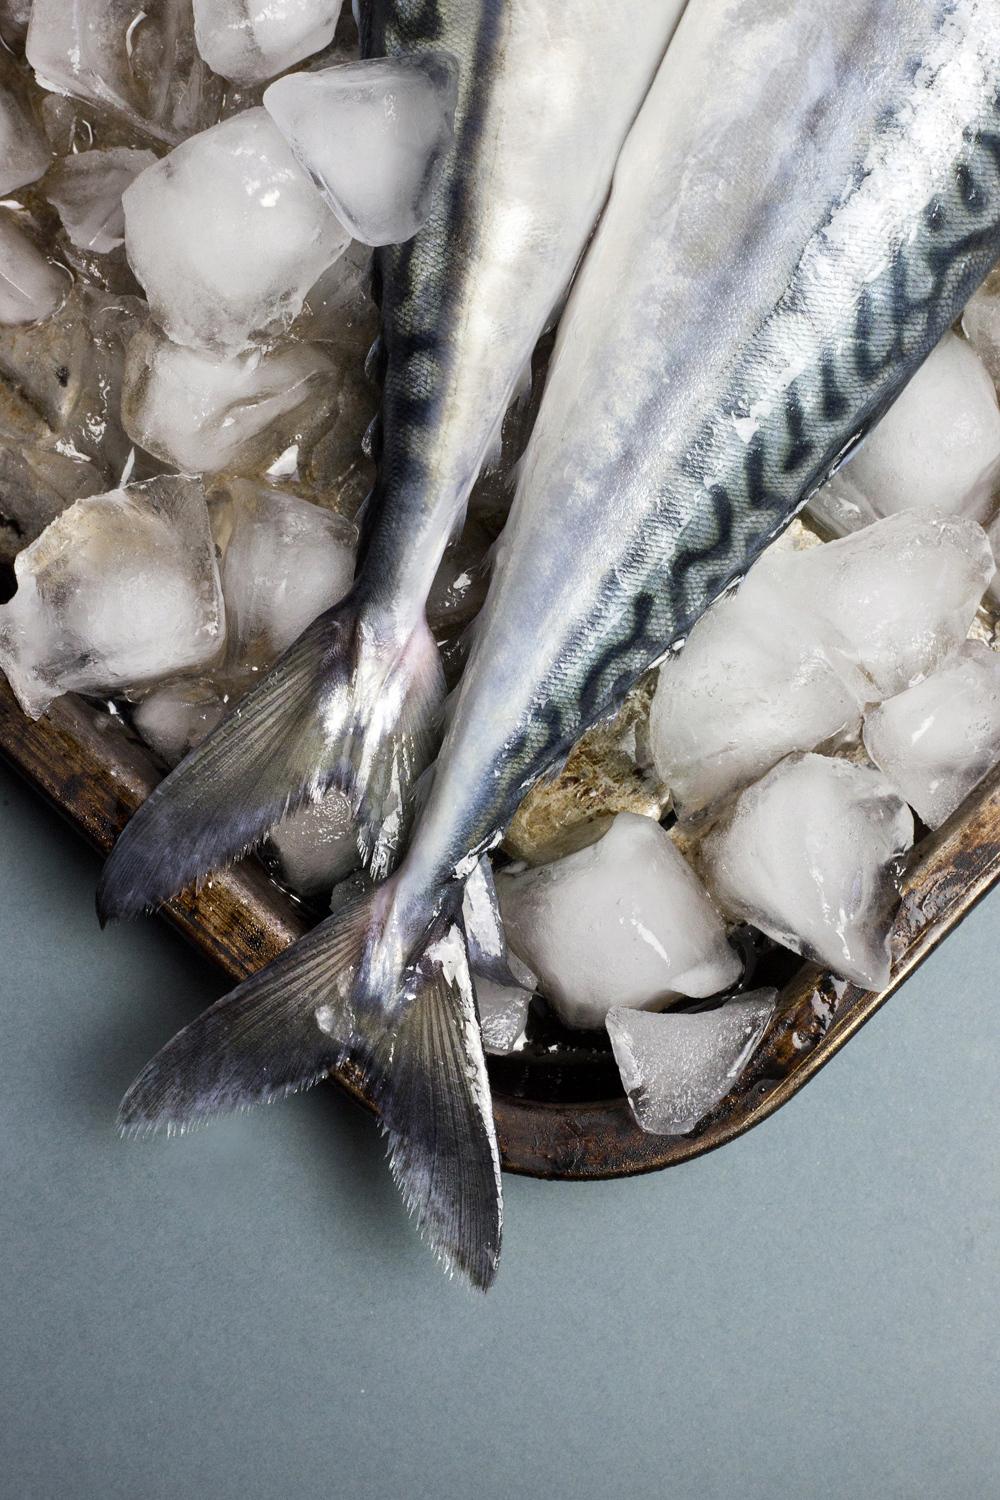 Mackerel, fish, food photography, photographer liverpool, fish scales, fish, ice